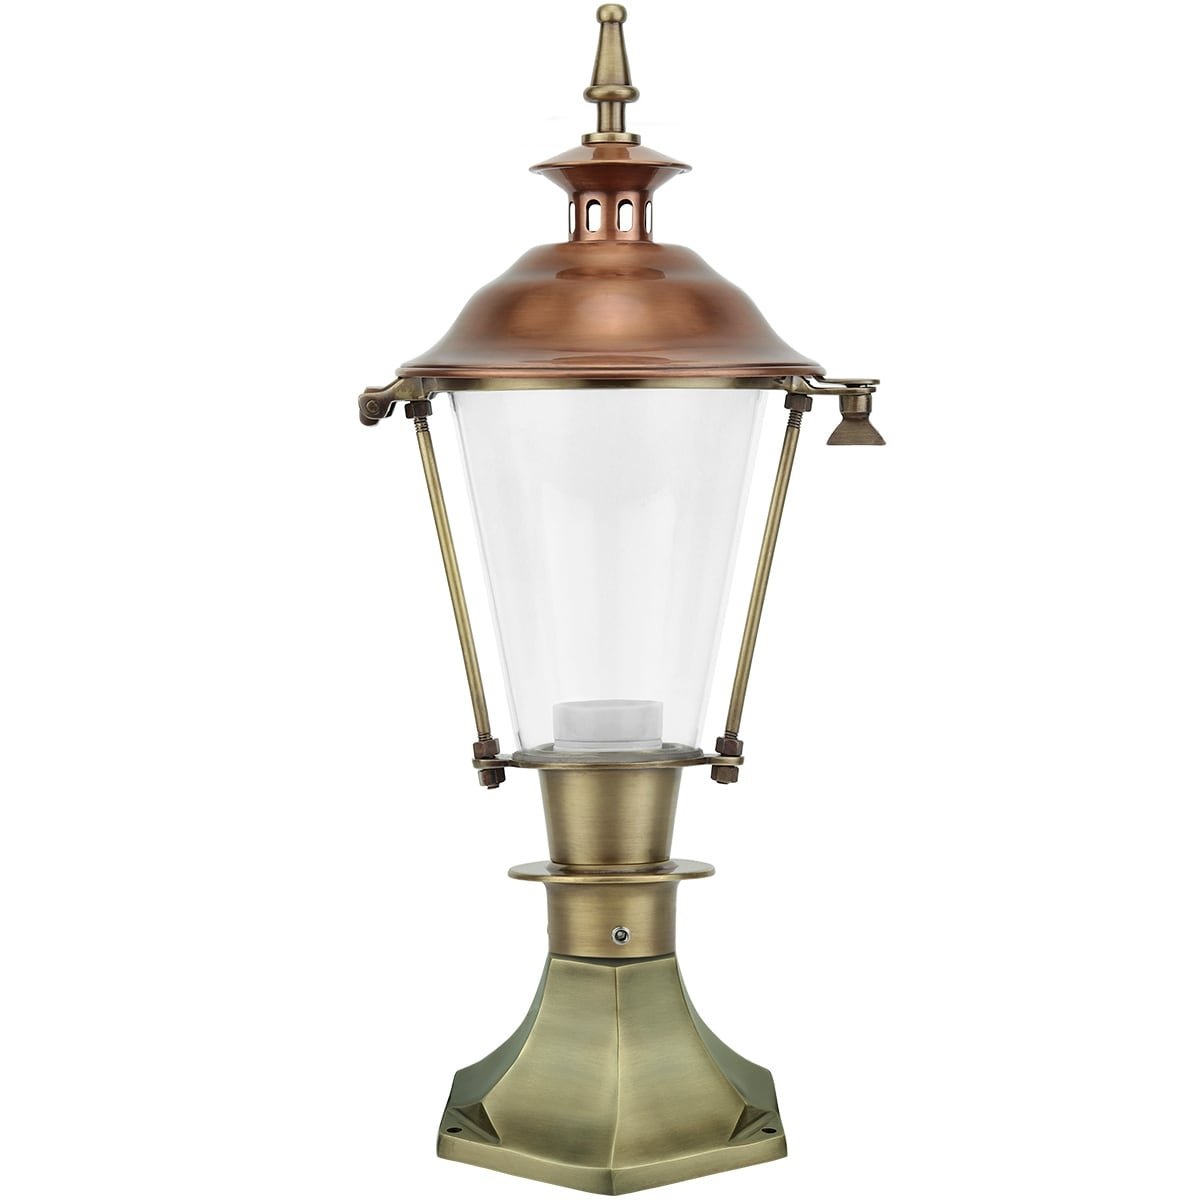 Buitenlampen Antiek Klassiek Tuinlamp grond Haghorst messing - 52 cm